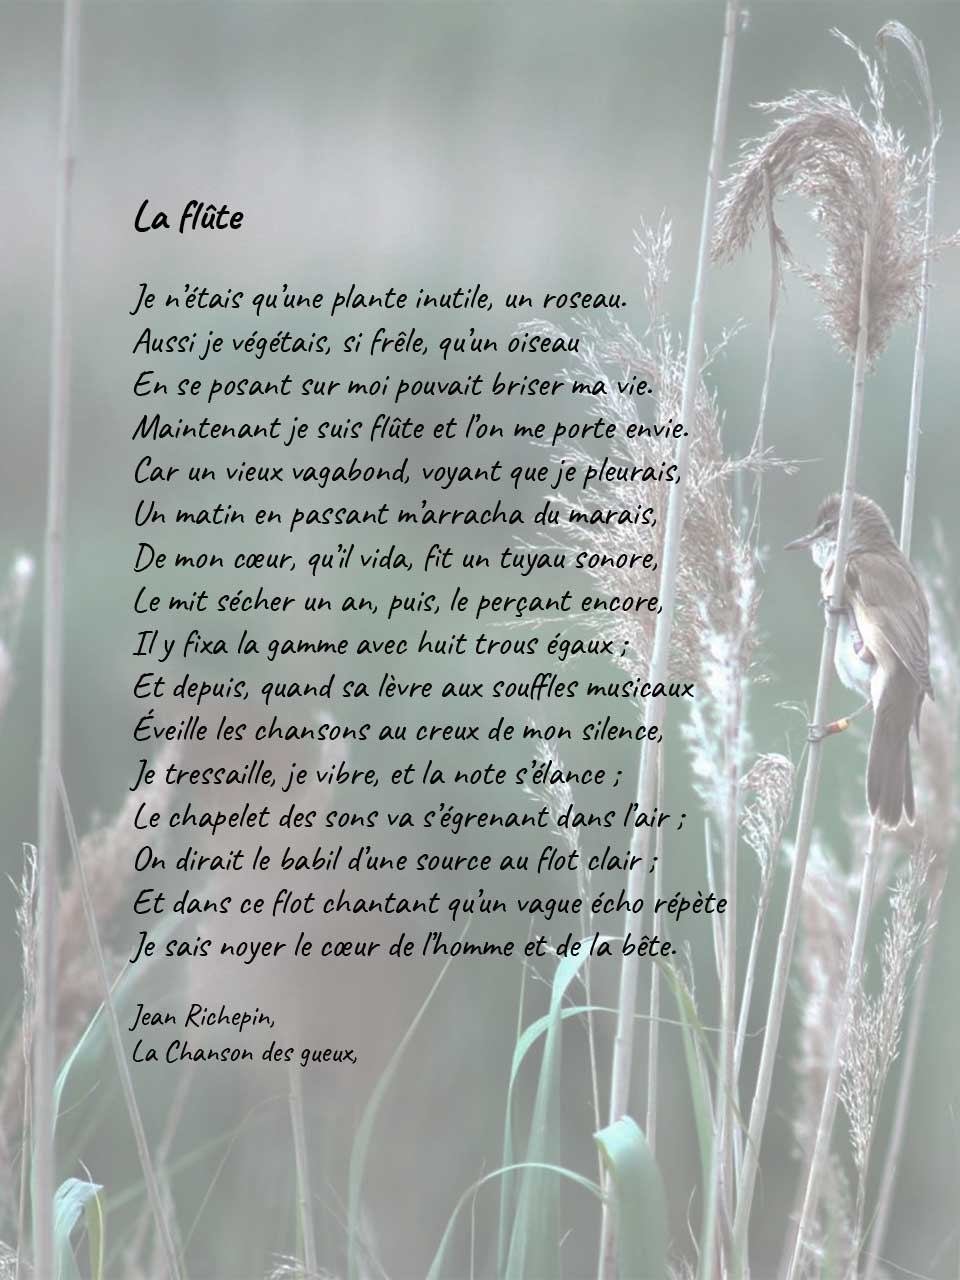 Poème « La flûte » de Jean Richepin